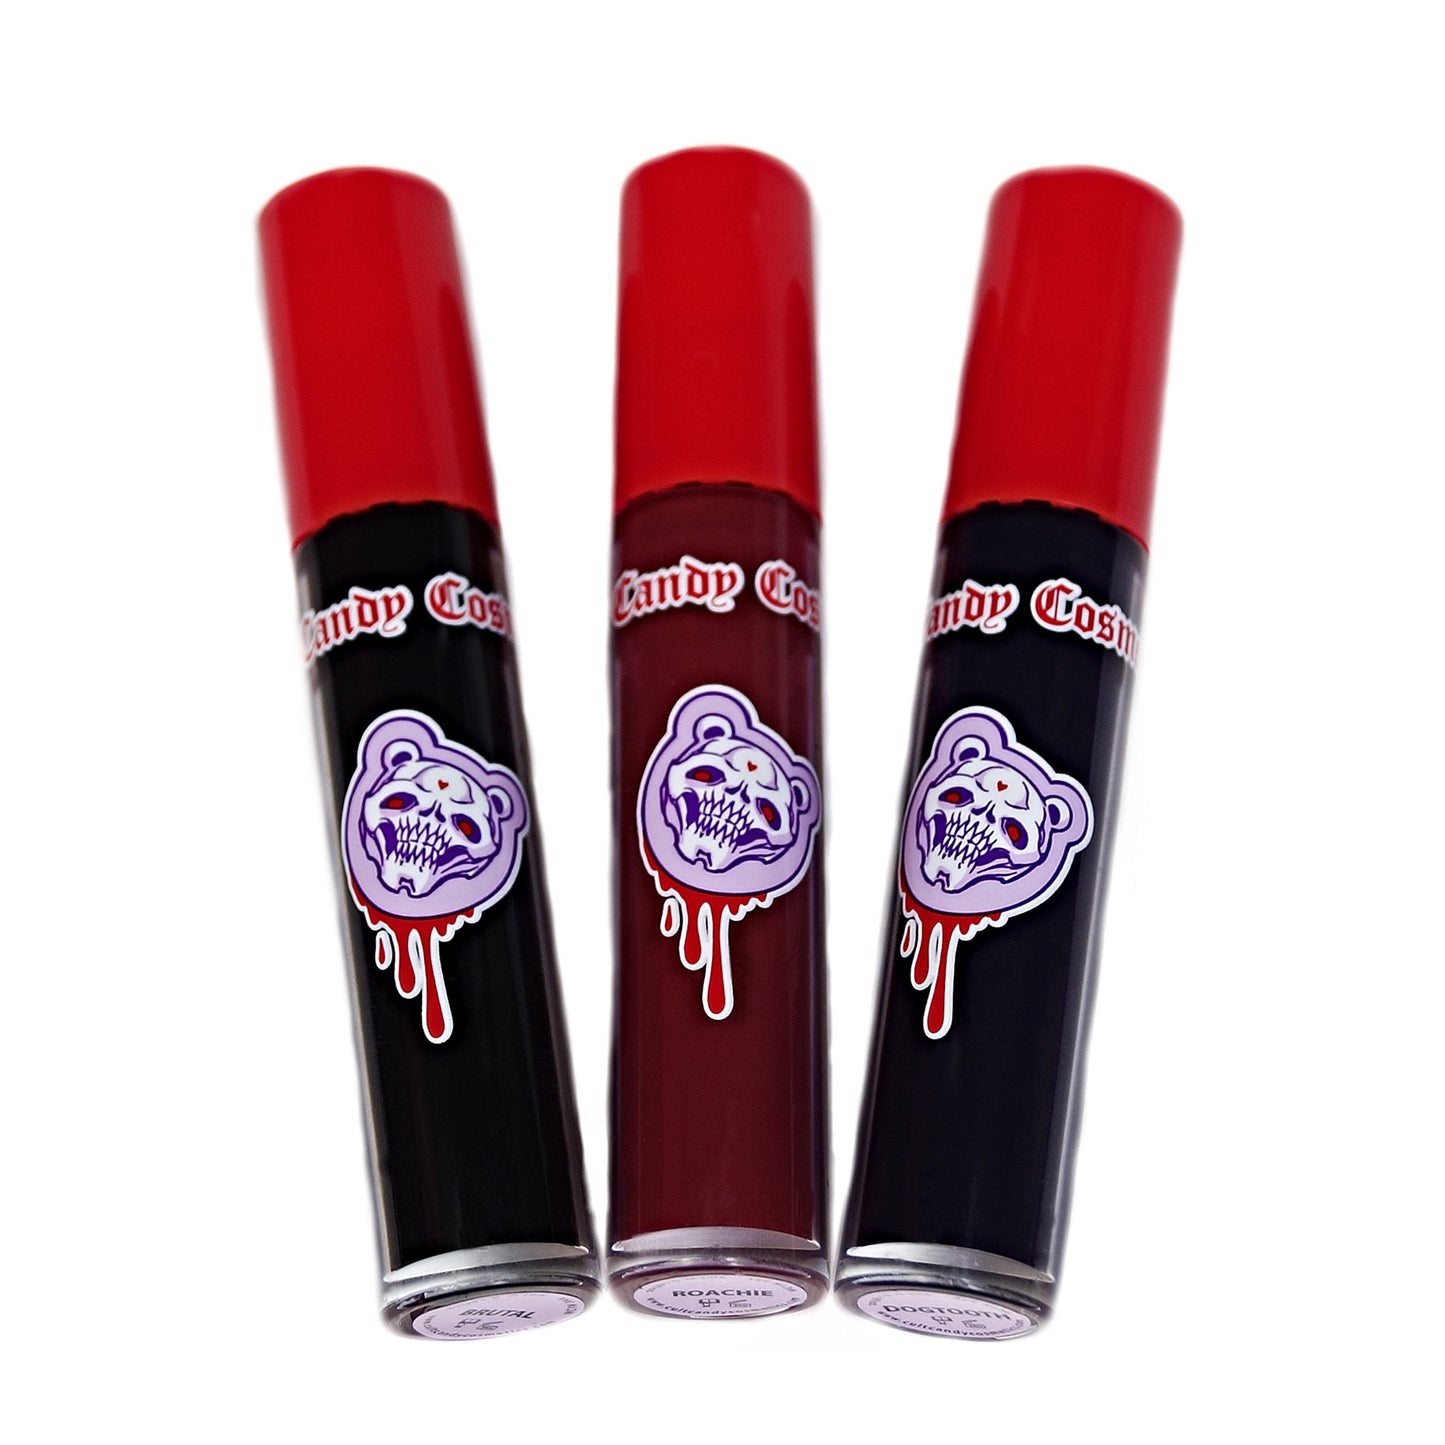 Vegan lipstick bundle - SINISTER SWEET